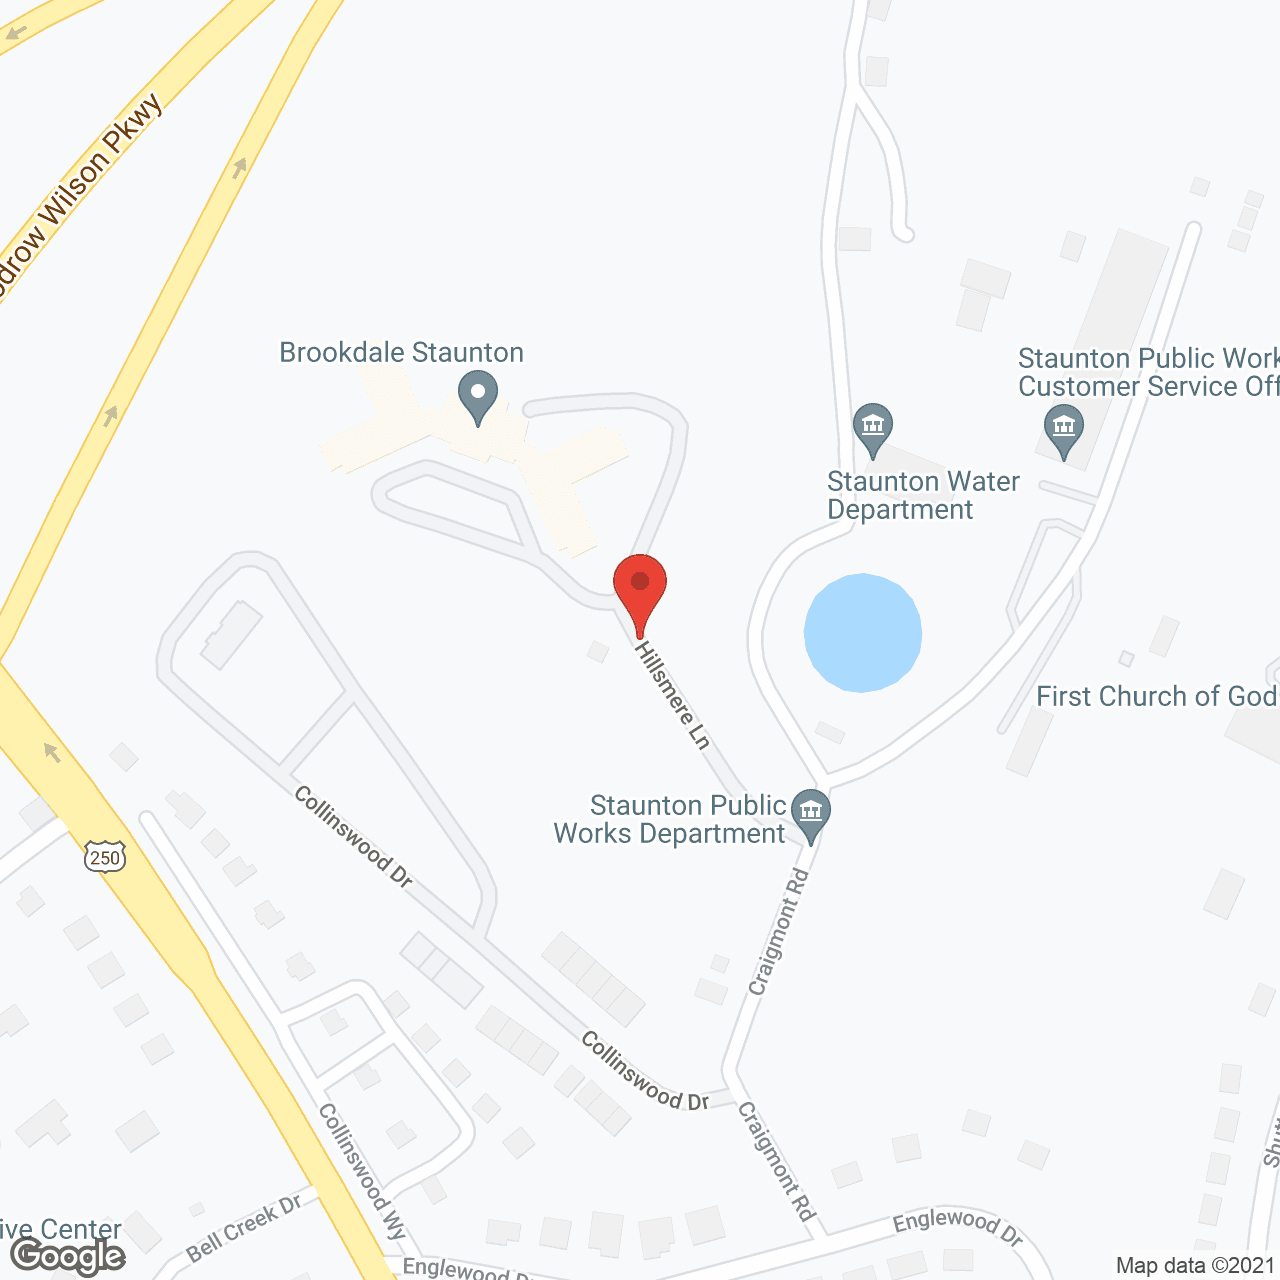 Brookdale Staunton in google map